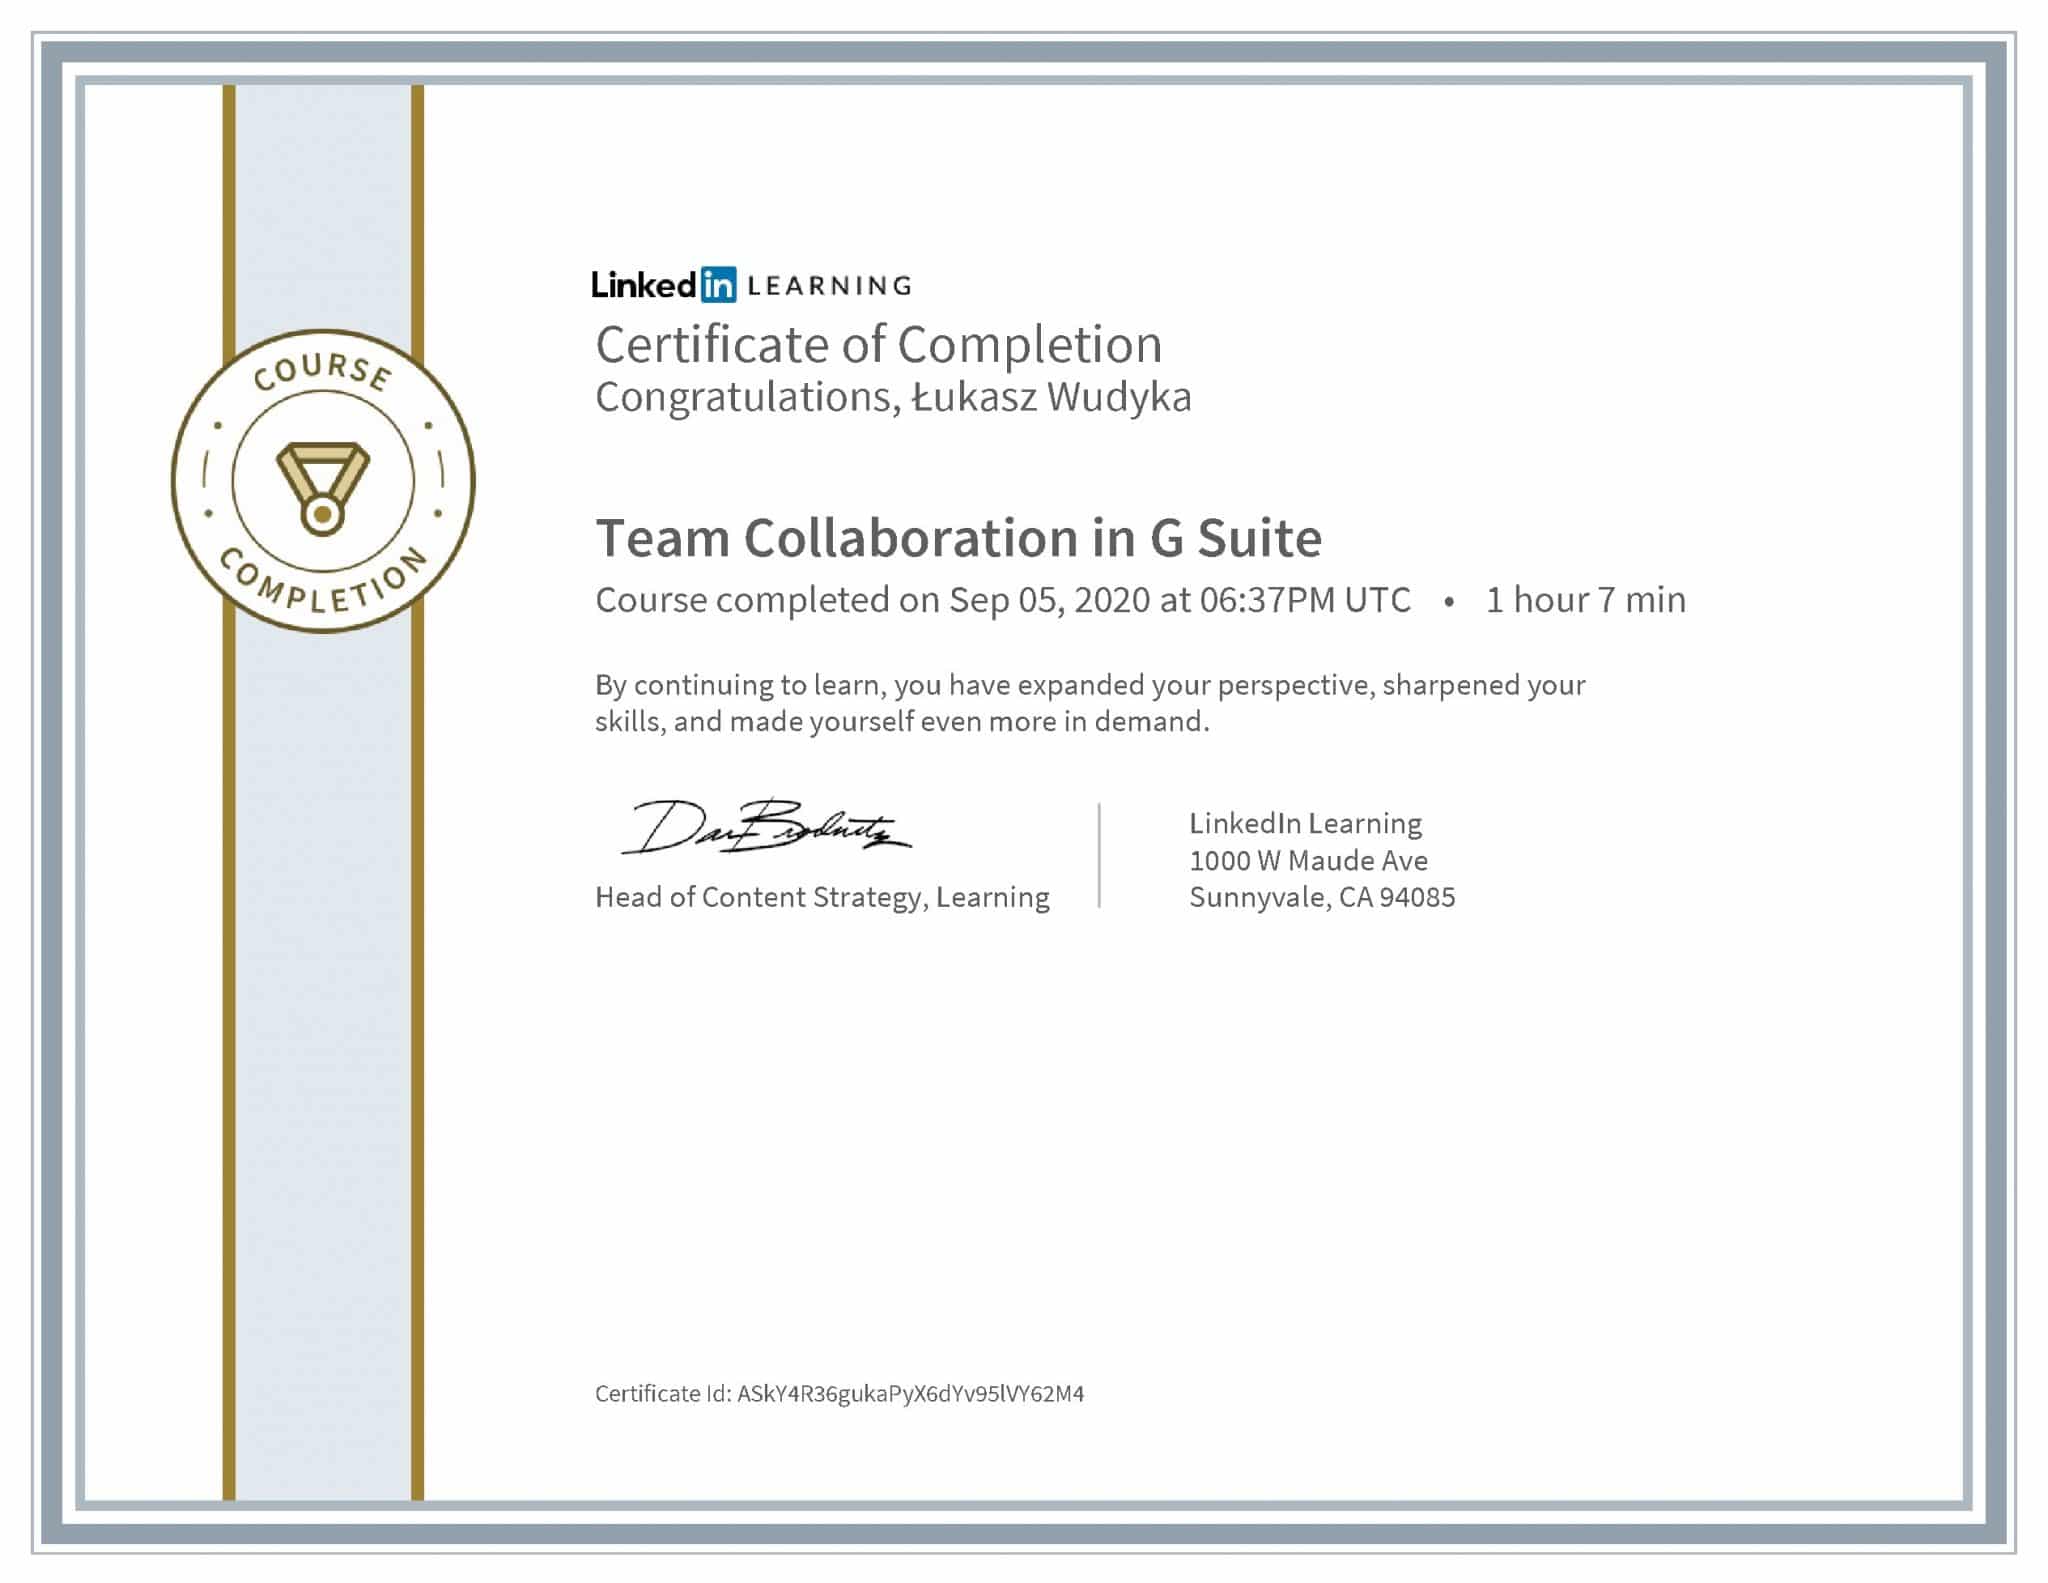 Łukasz Wudyka certyfikat LinkedIn Team Collaboration in G Suite